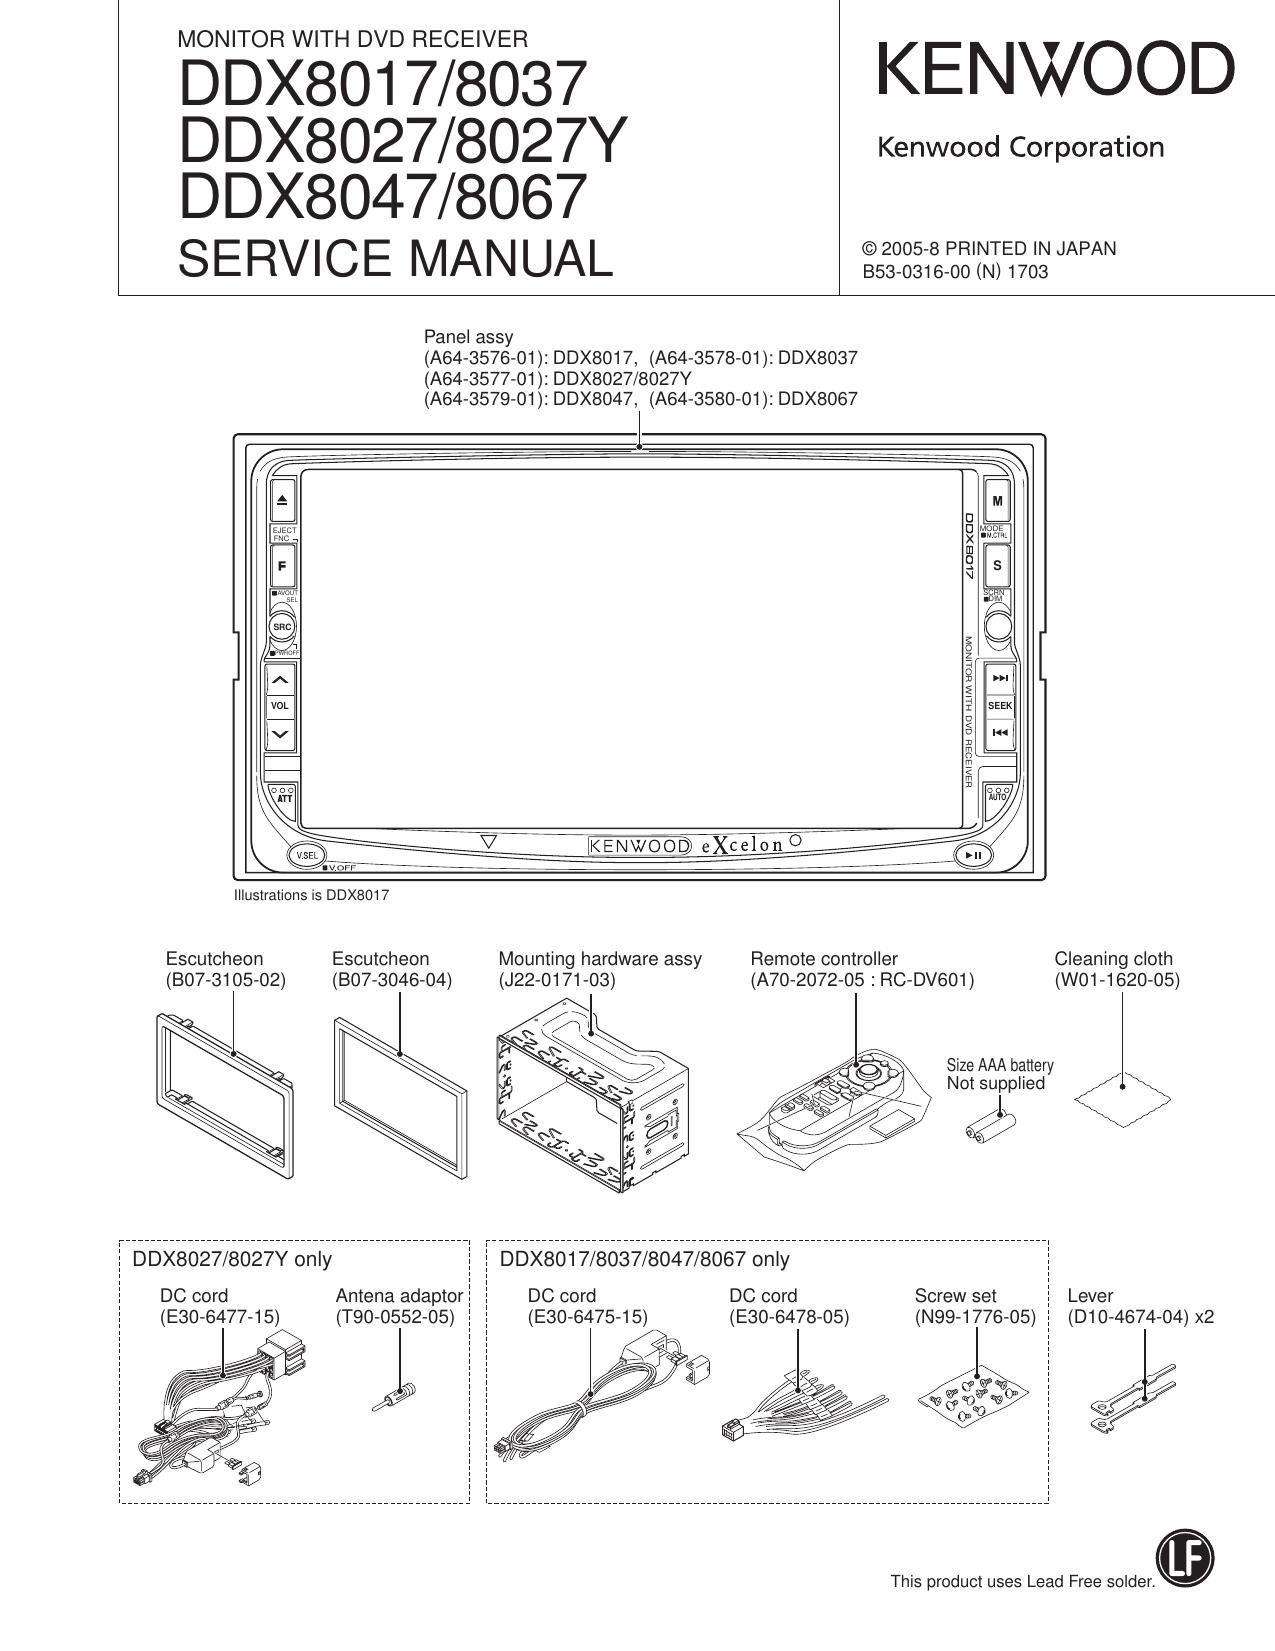 Kenwood DDX 8027 Y Service Manual